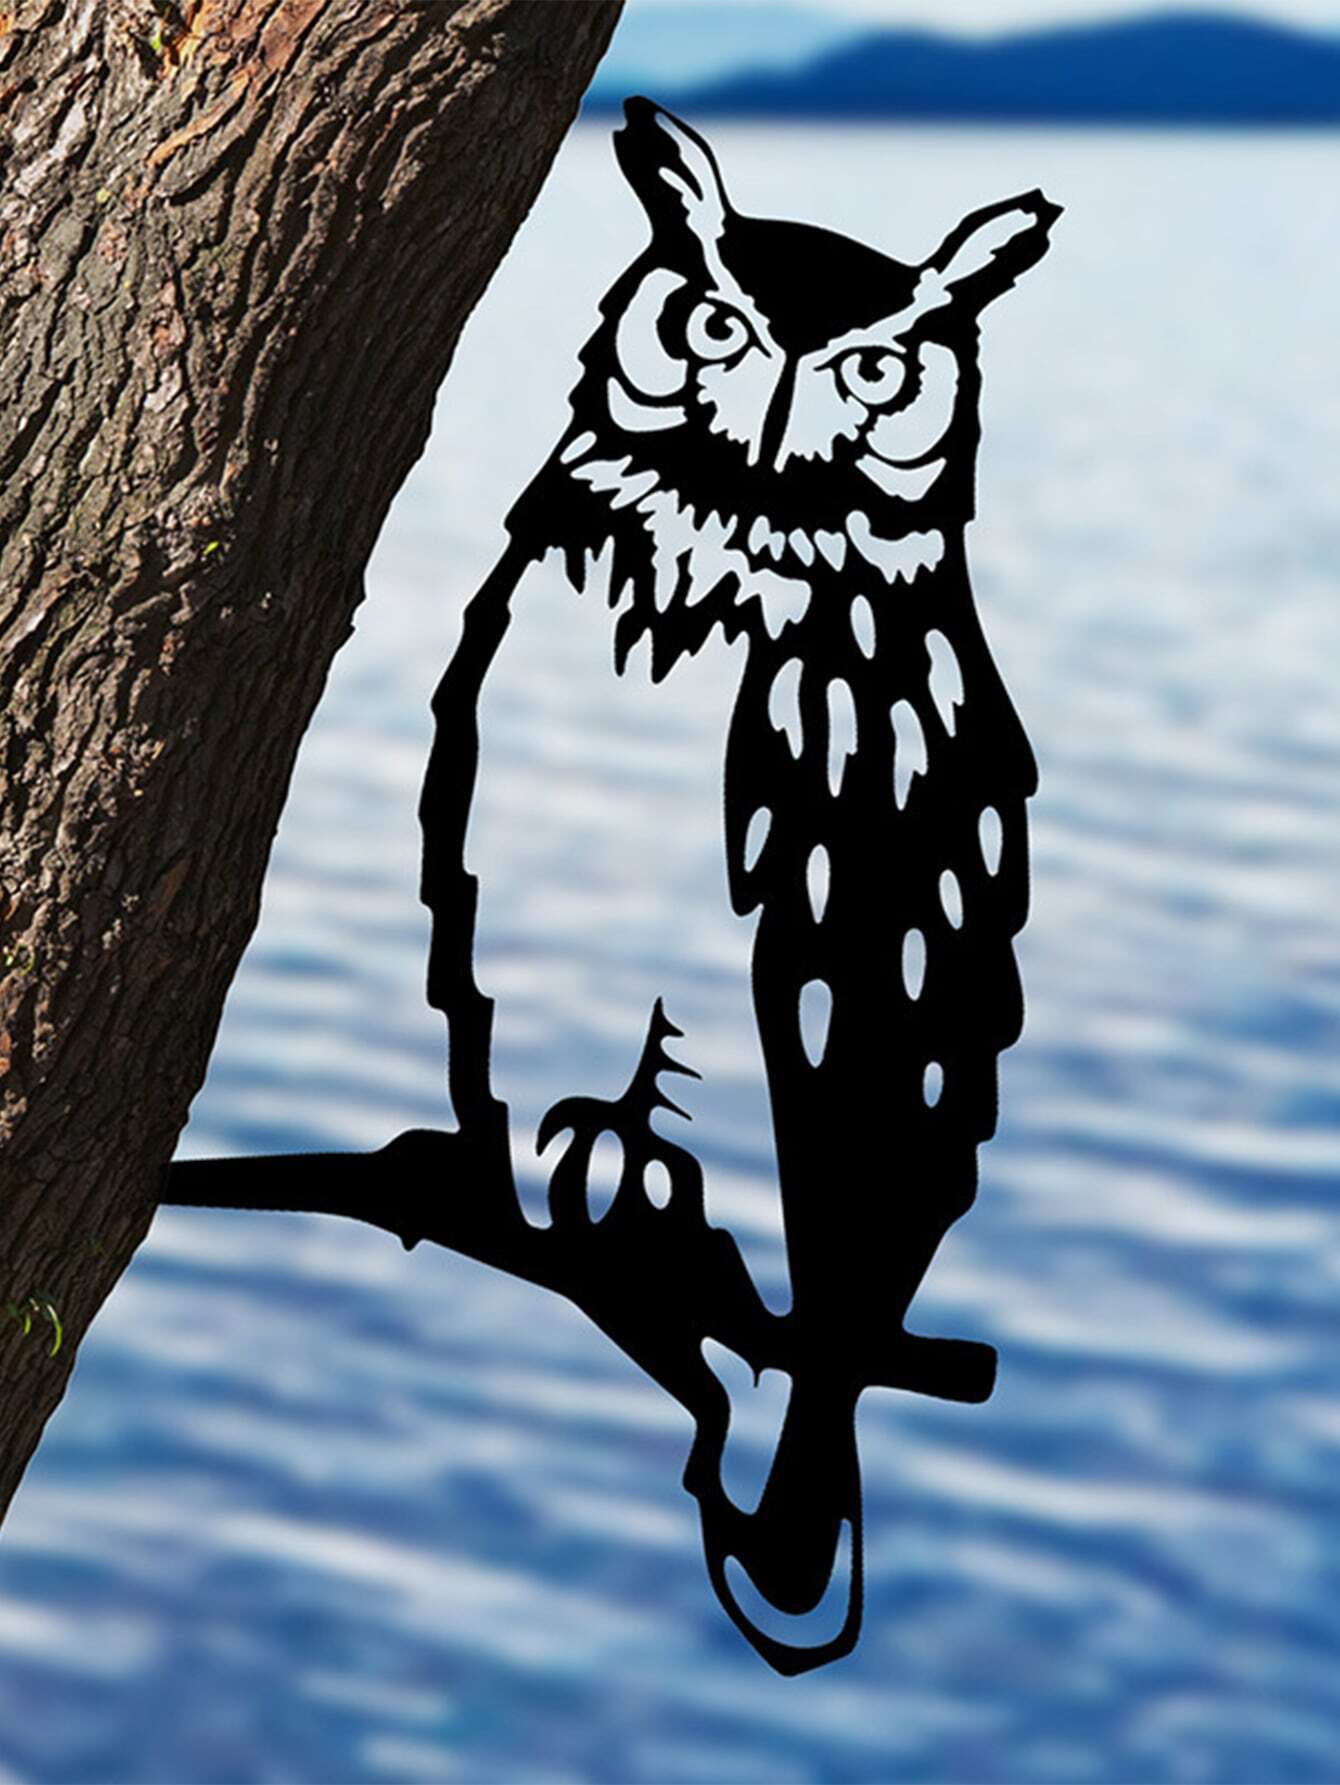 1pc Owl Design Decorative Garden Stake